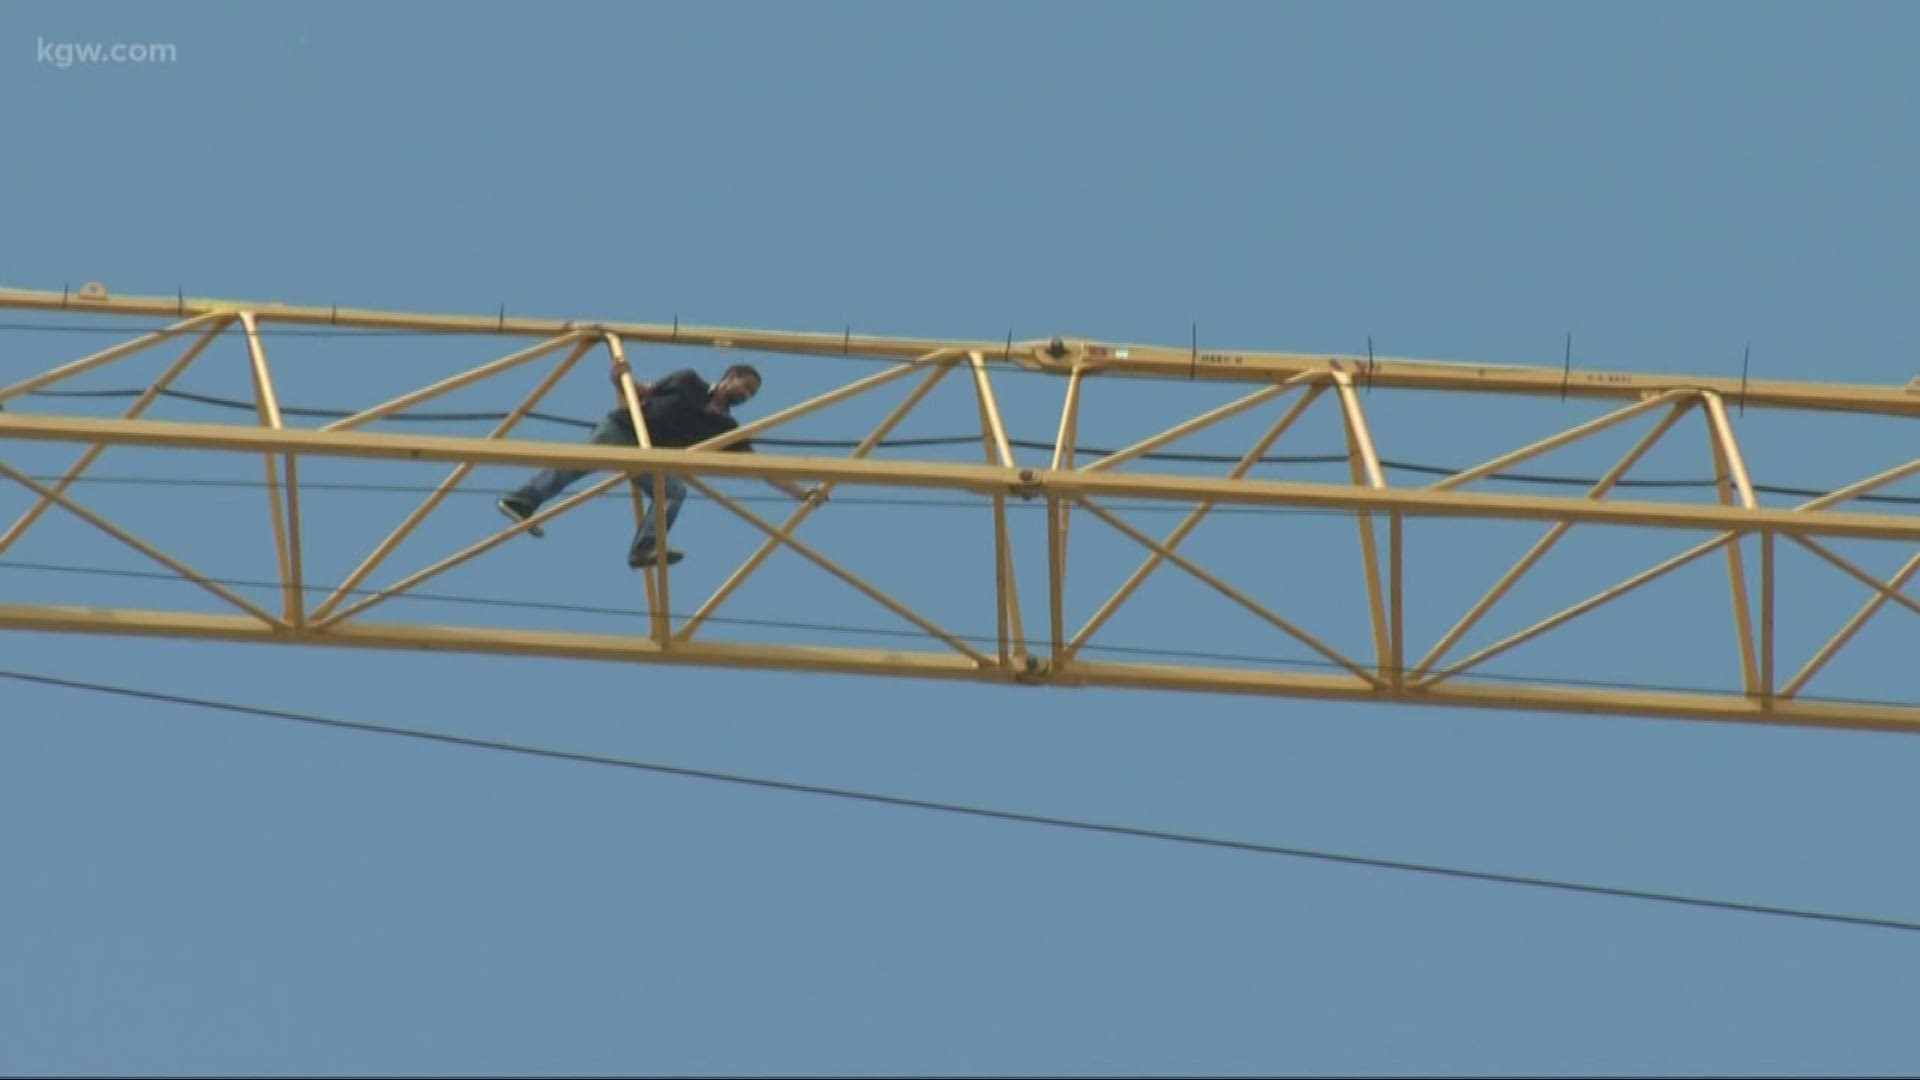 Man who climbed crane is safe